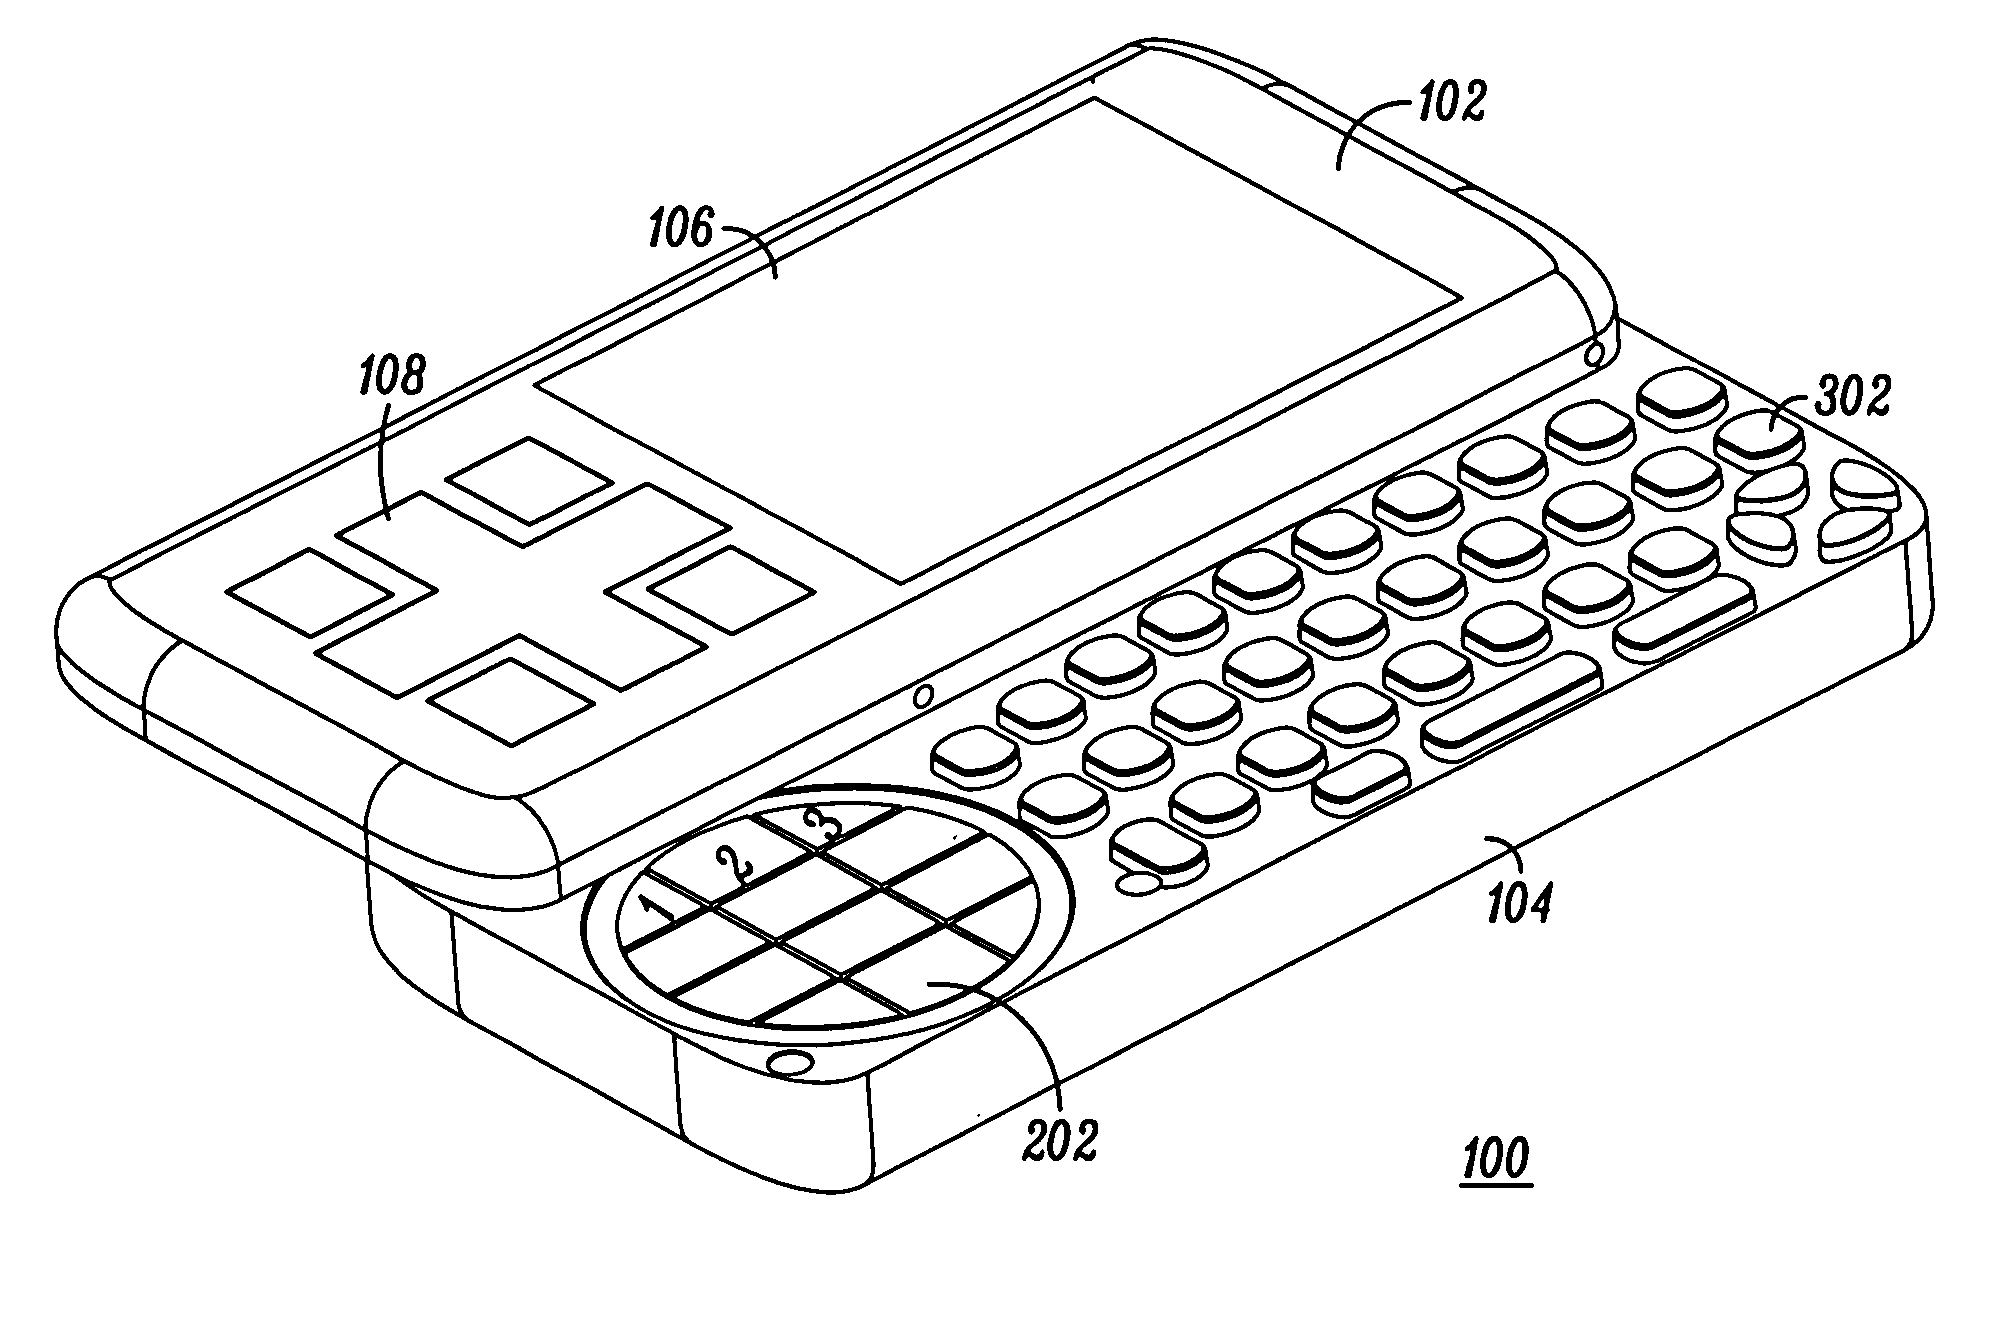 Mobile electronic device having a rotatable keypad